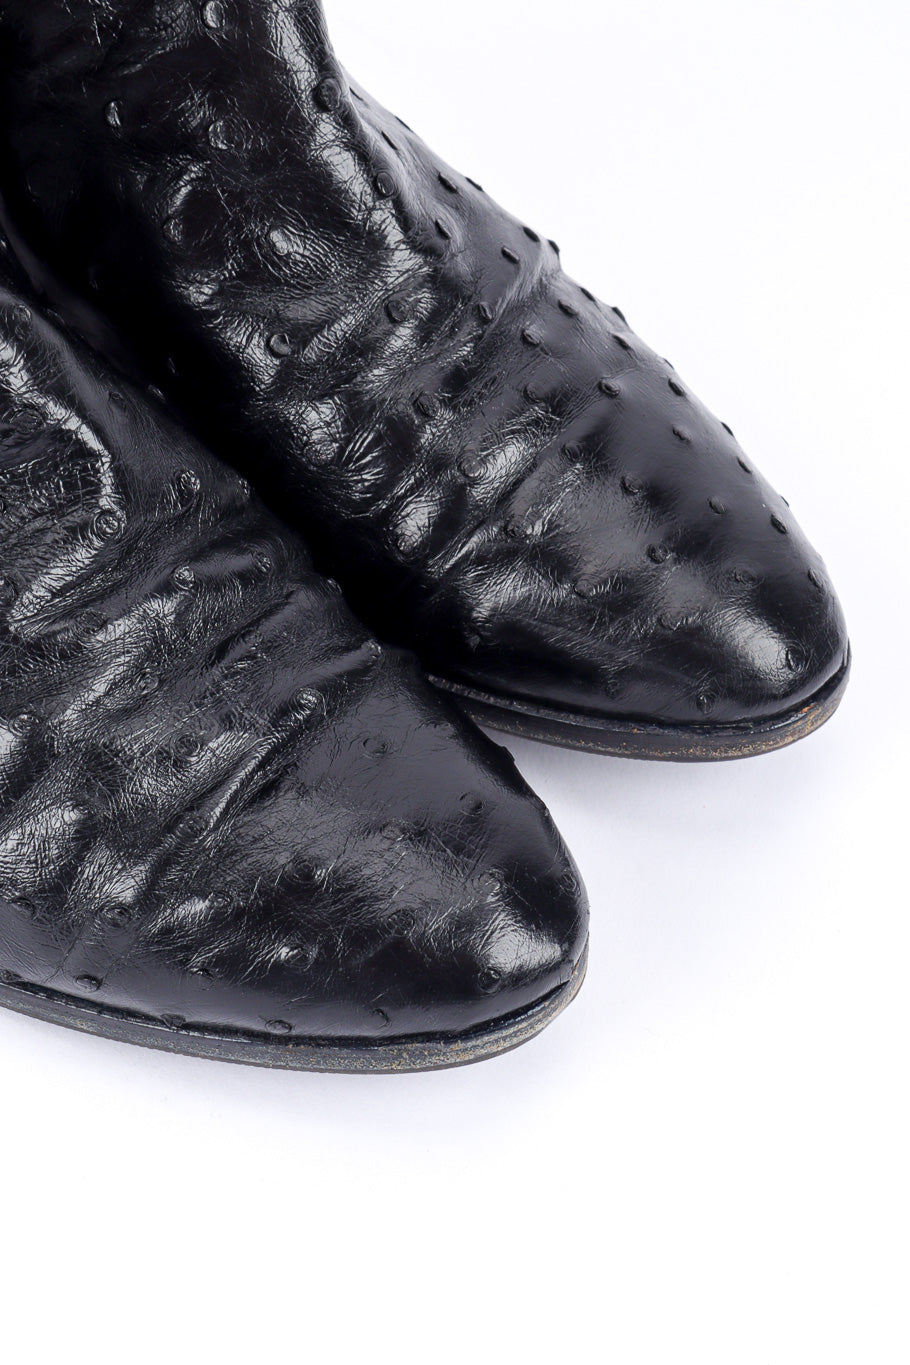 Vintage Gucci Black Ostrich Leather Riding Boot toe crease closeup @recessla